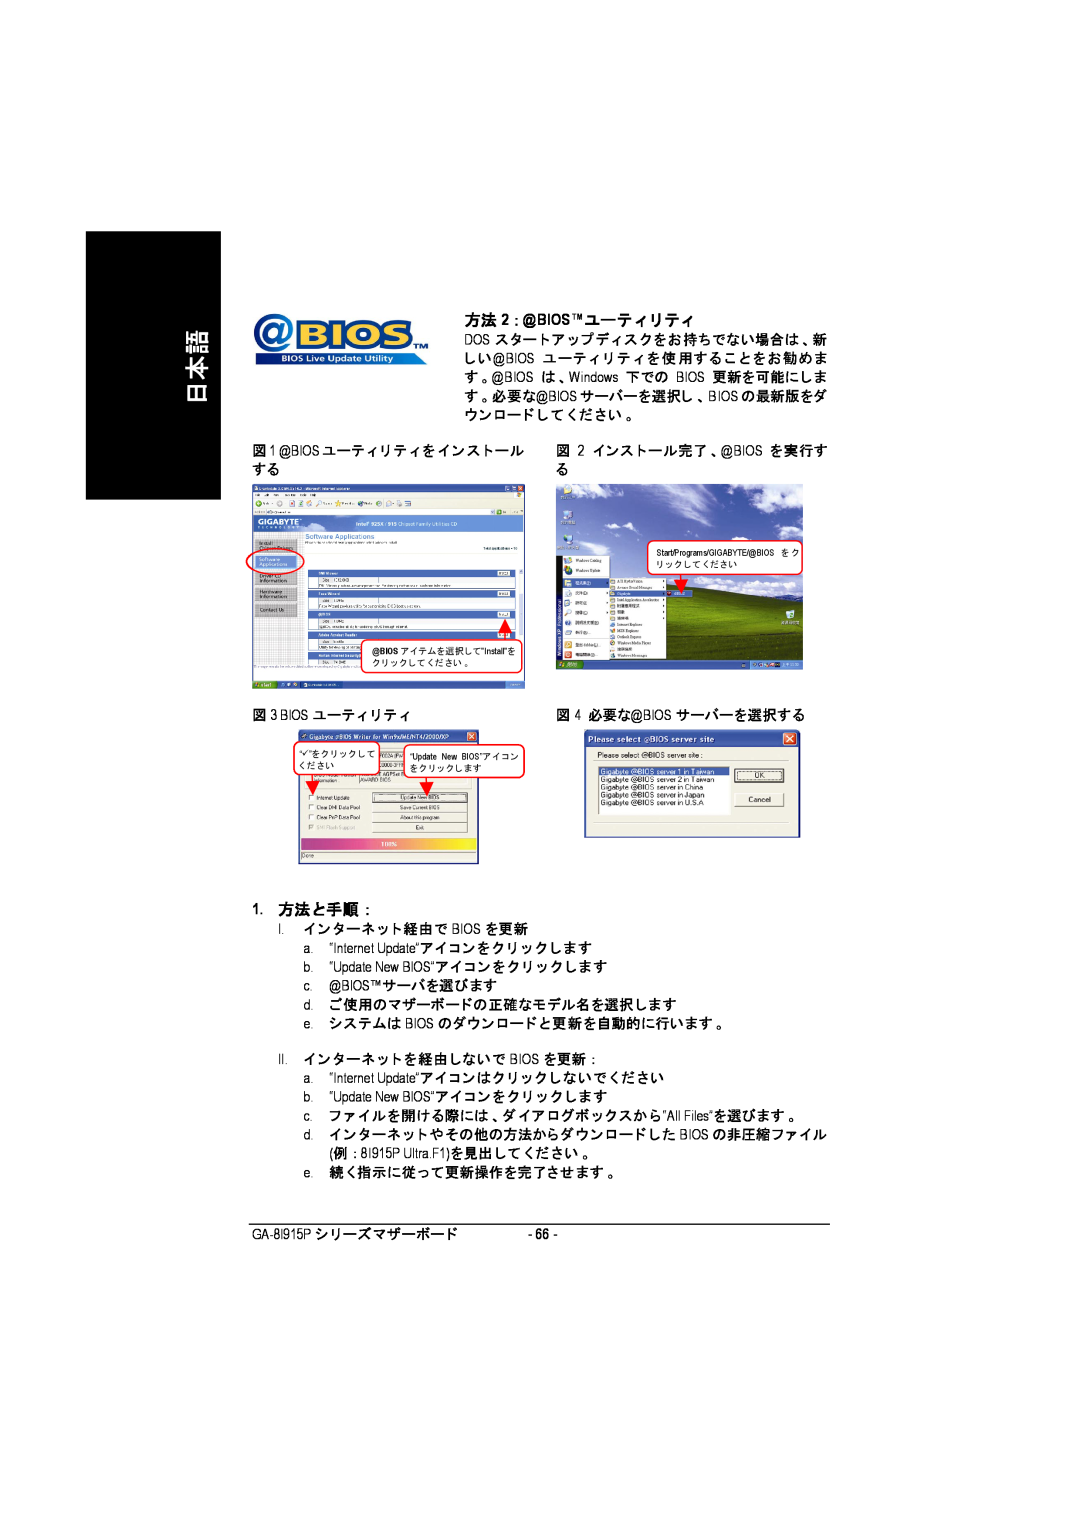 Intel GA-8I915P manual 方法 2 ：@BIOSユーテ ィ リティ, 1. 方法と手順 ： 